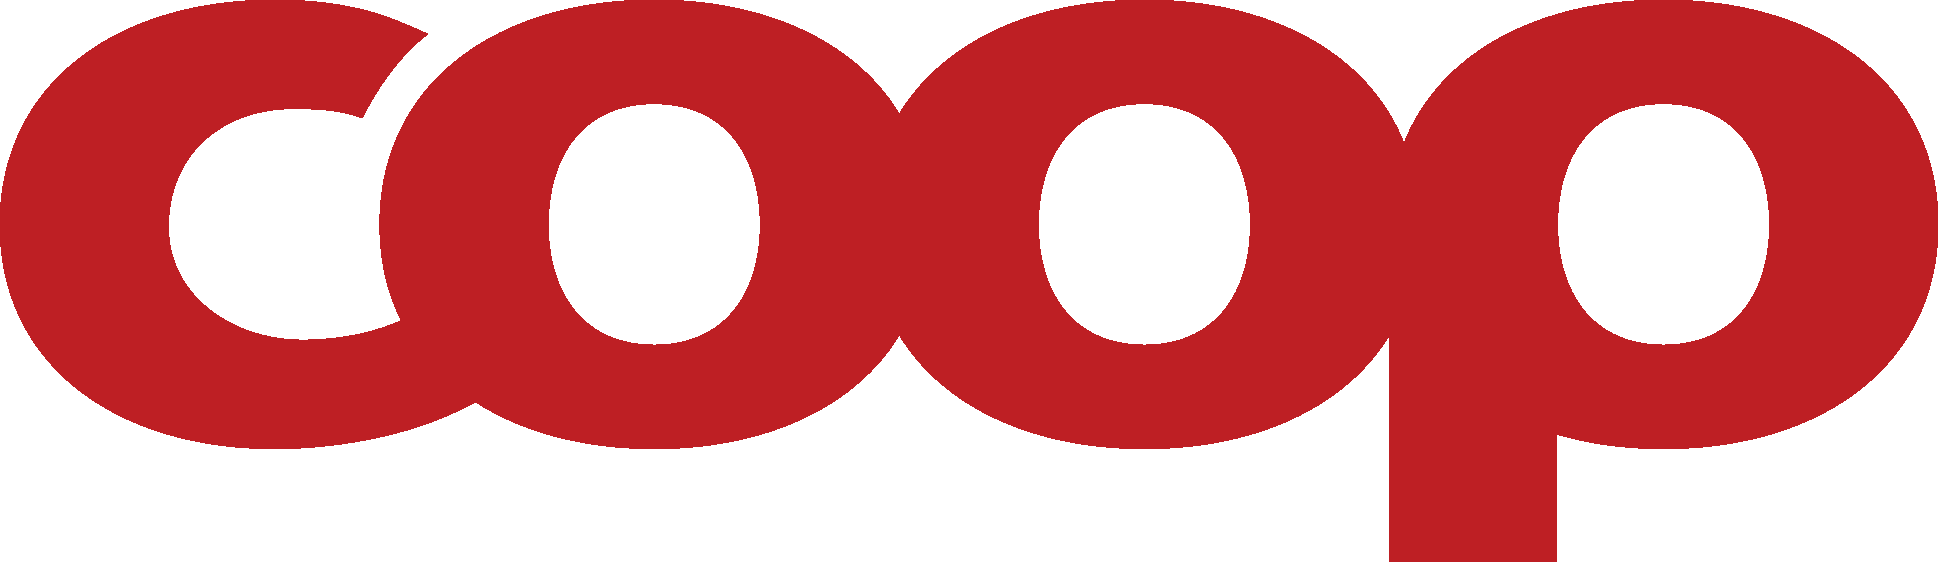 Coop Logo png